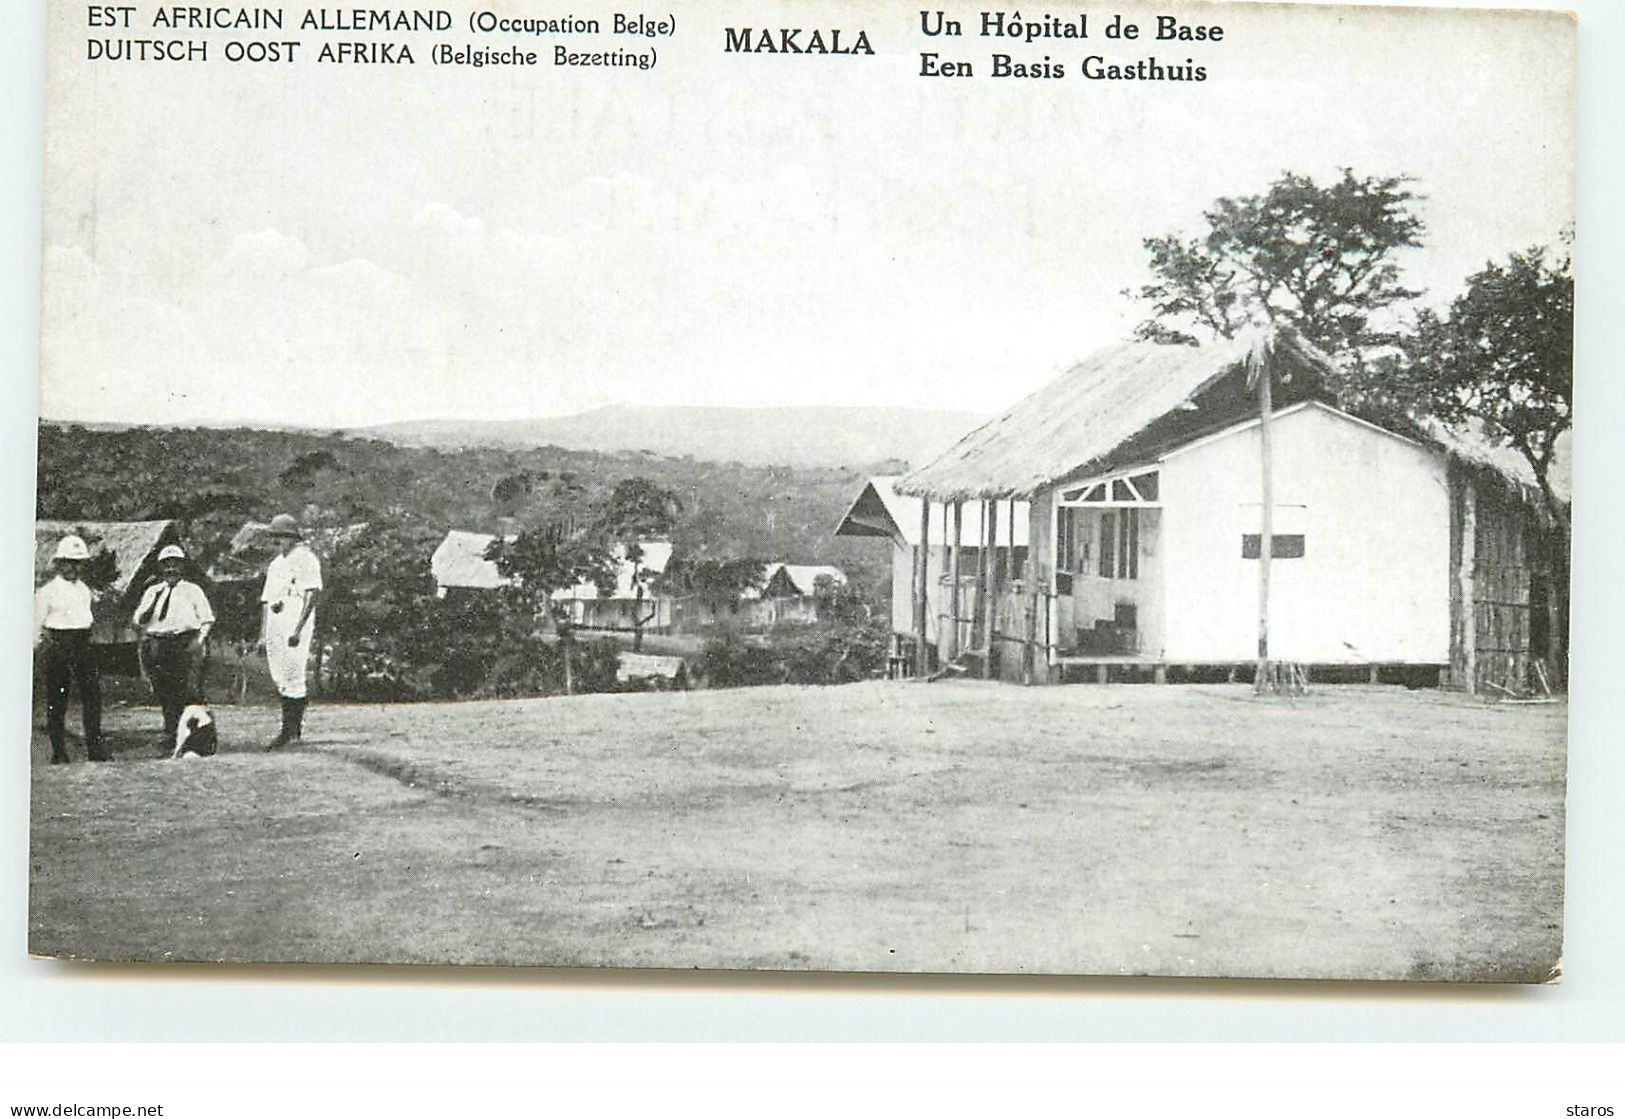 Est Africain Allemand (Occupation Belge) - MAKALA - Un Hôpital De Base - Belgian Congo